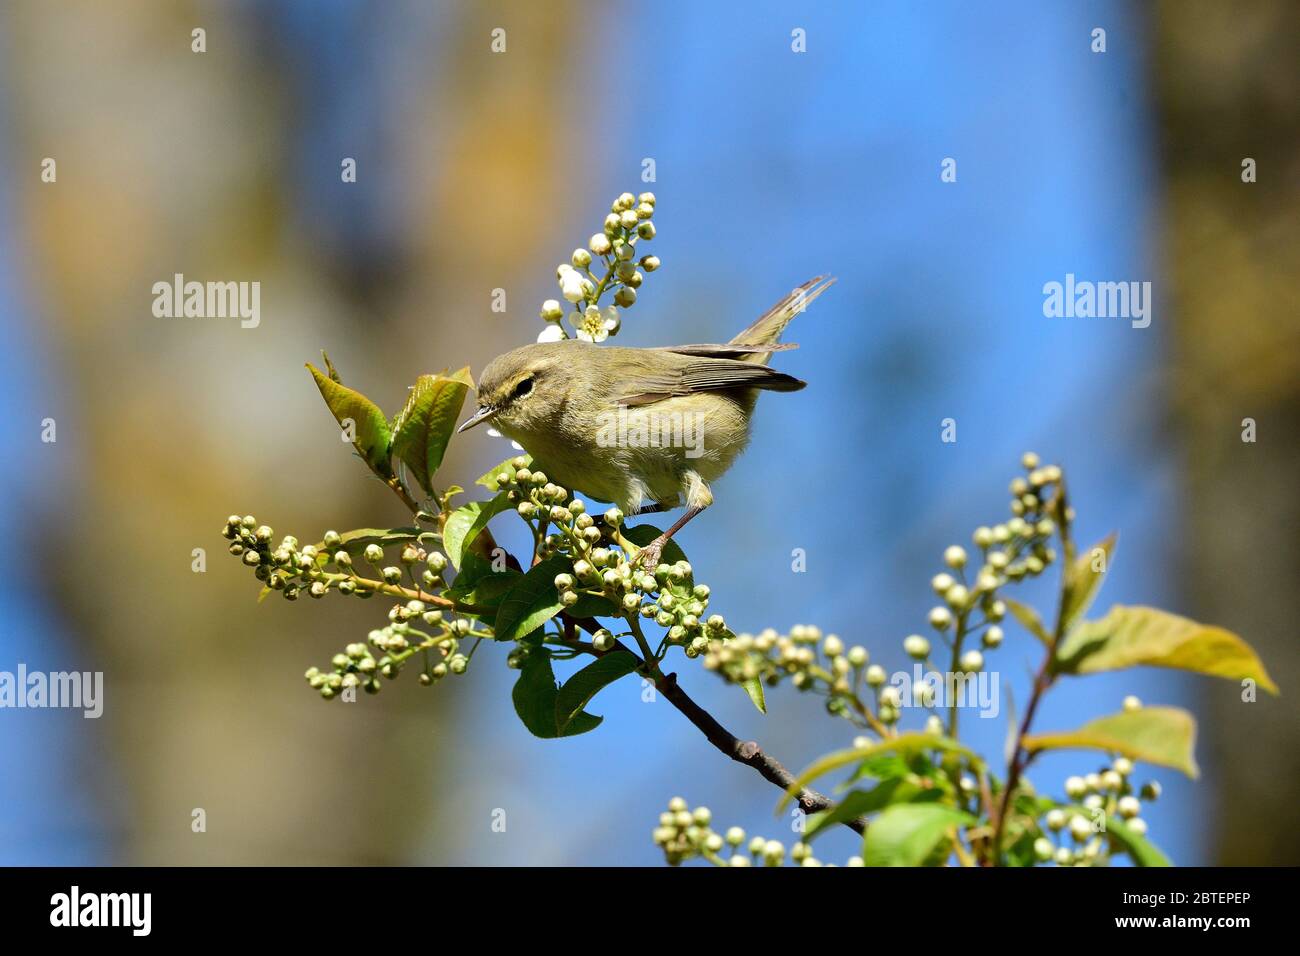 Prunus badus -Fotos und -Bildmaterial in hoher Auflösung – Alamy